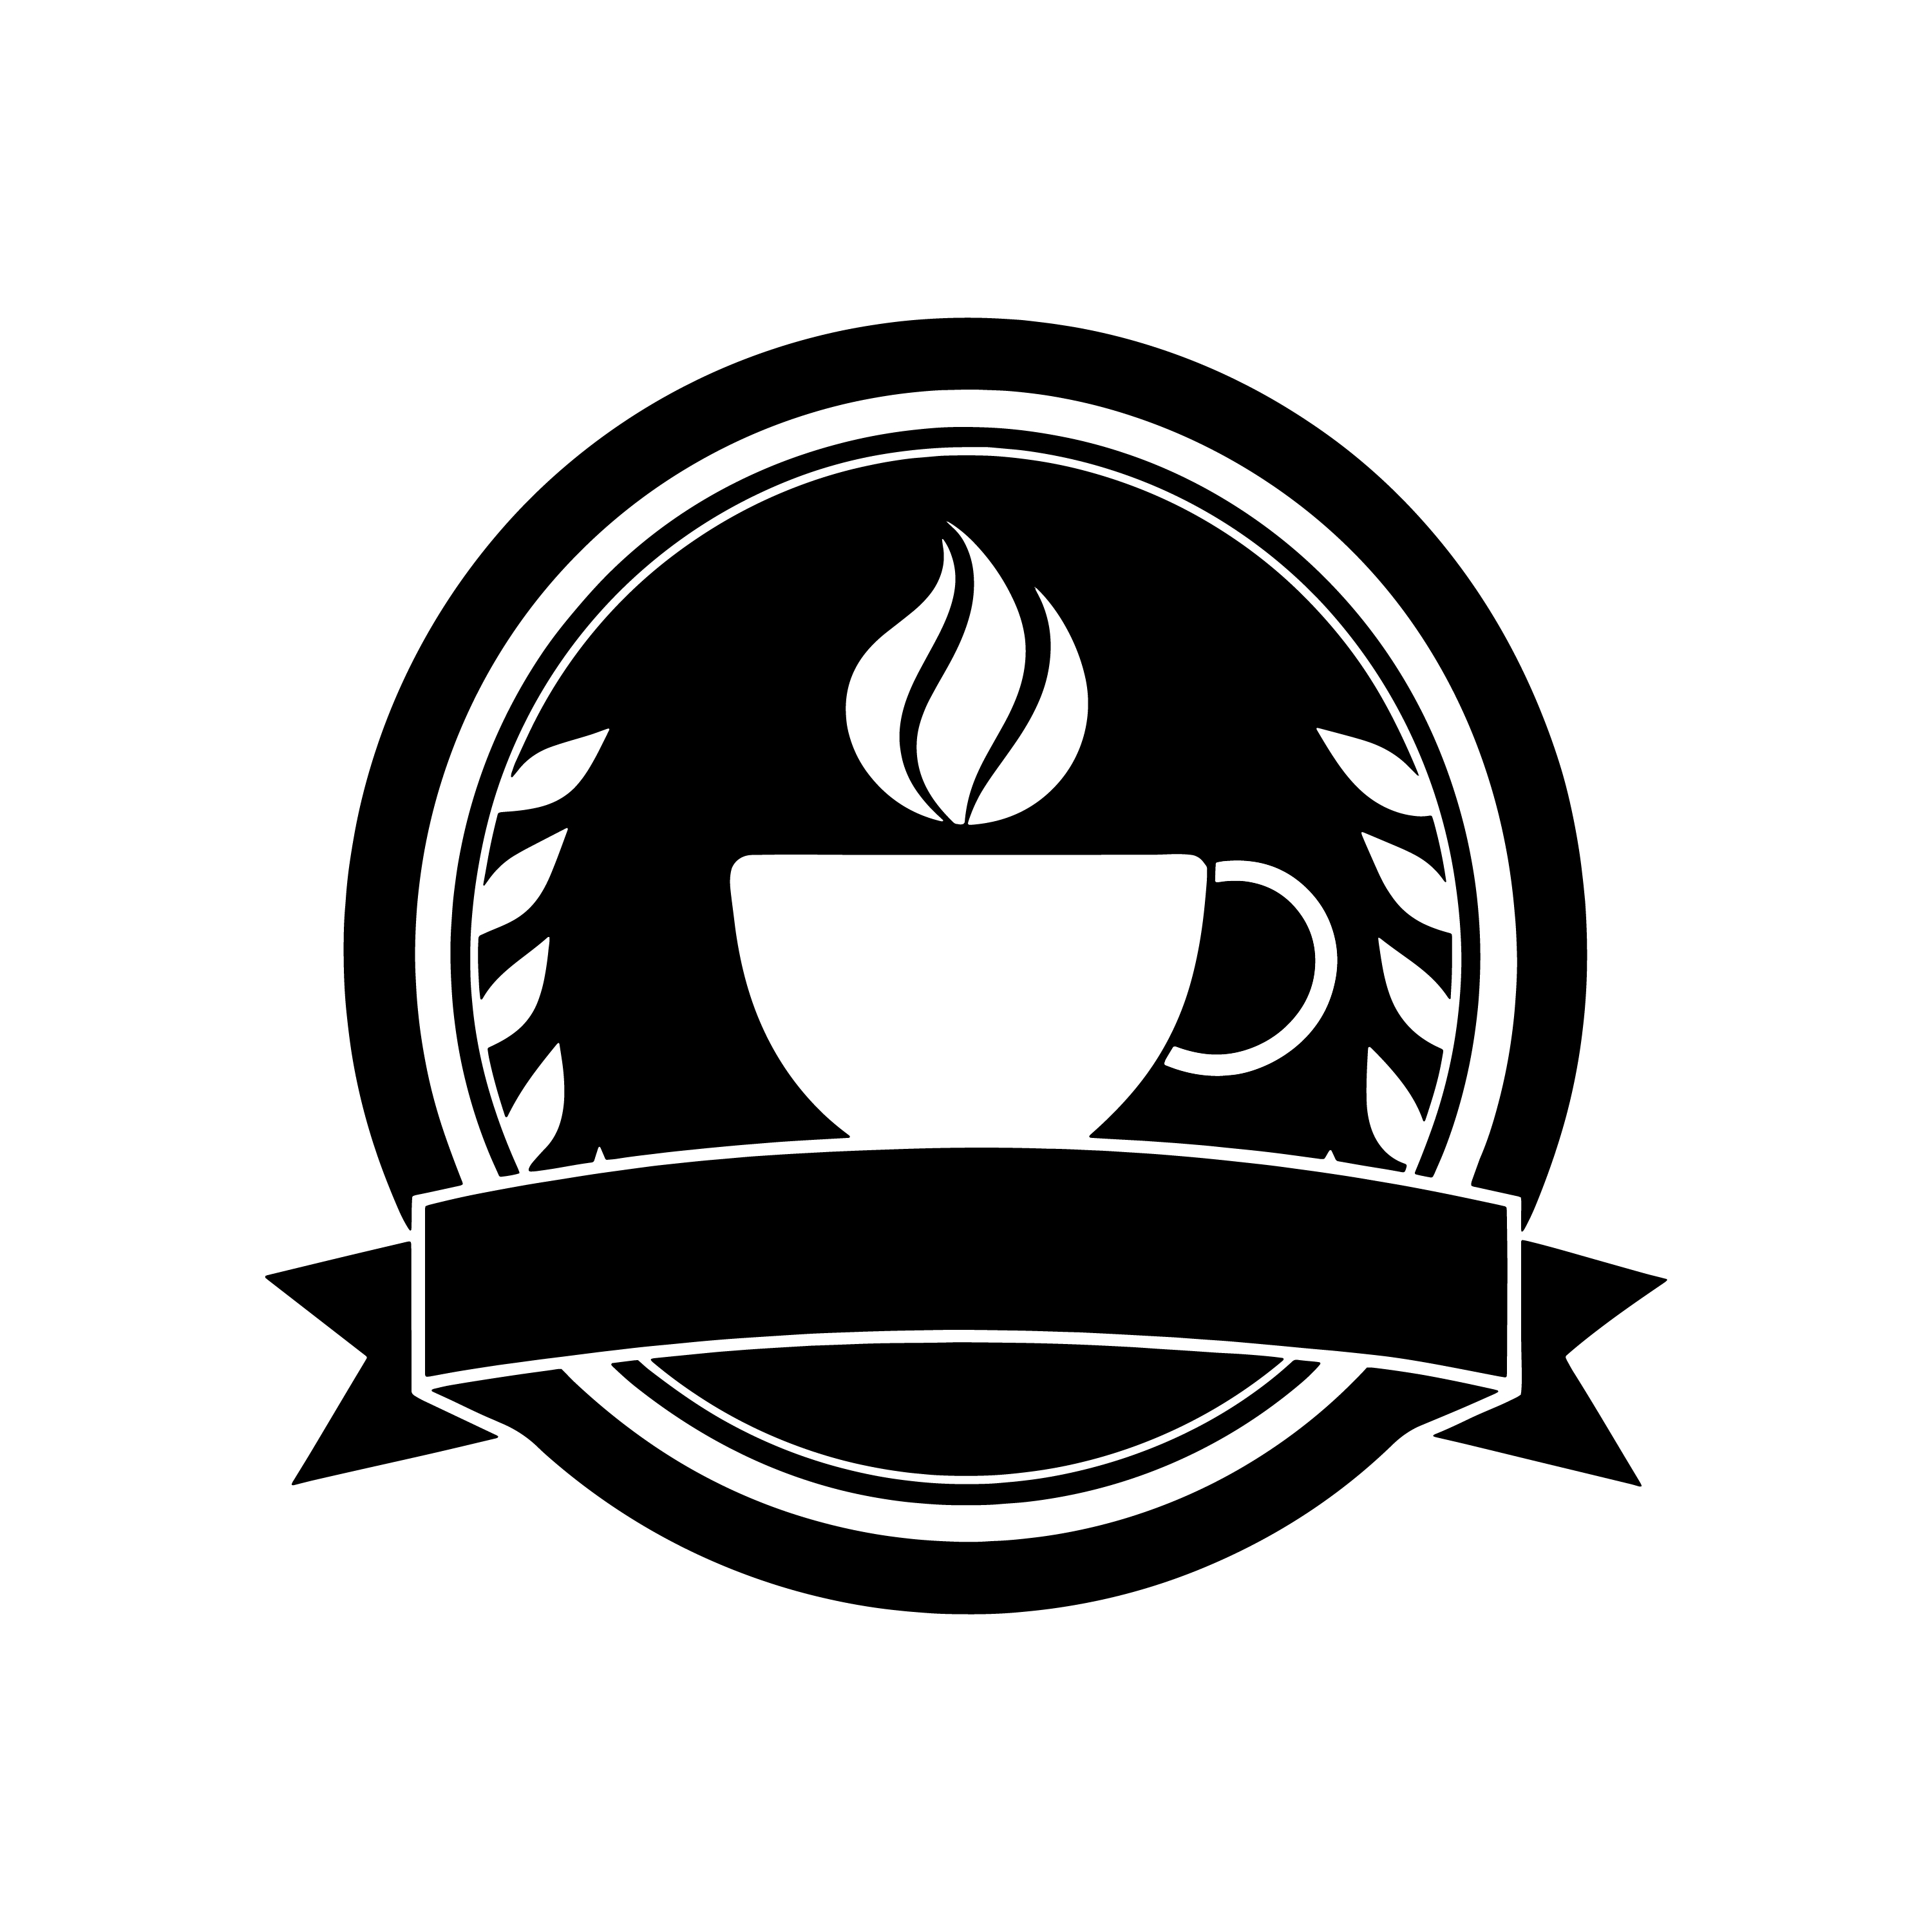 LOGO for Coffee Shop Illustration logo Editable preview image.